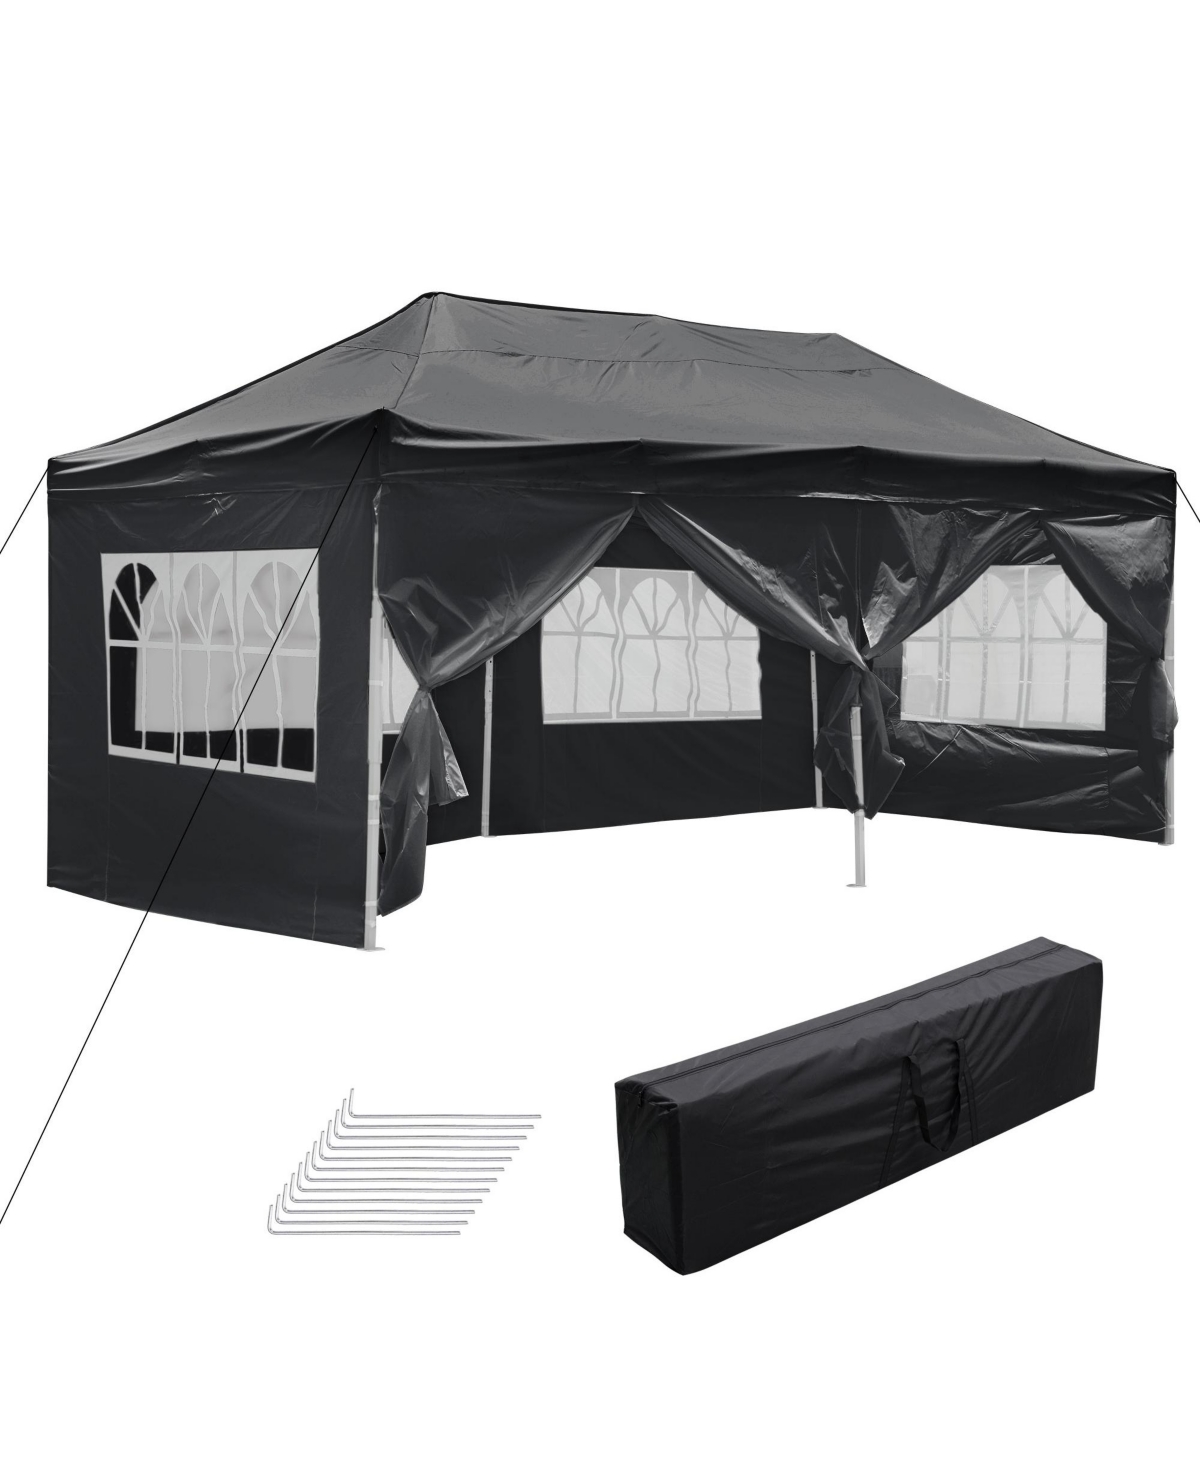 10x20FT Canopy Wedding Party Tent Pop Up Folding Gazebo Outdoor w/ 4 Sidewalls & Bag Black - Black